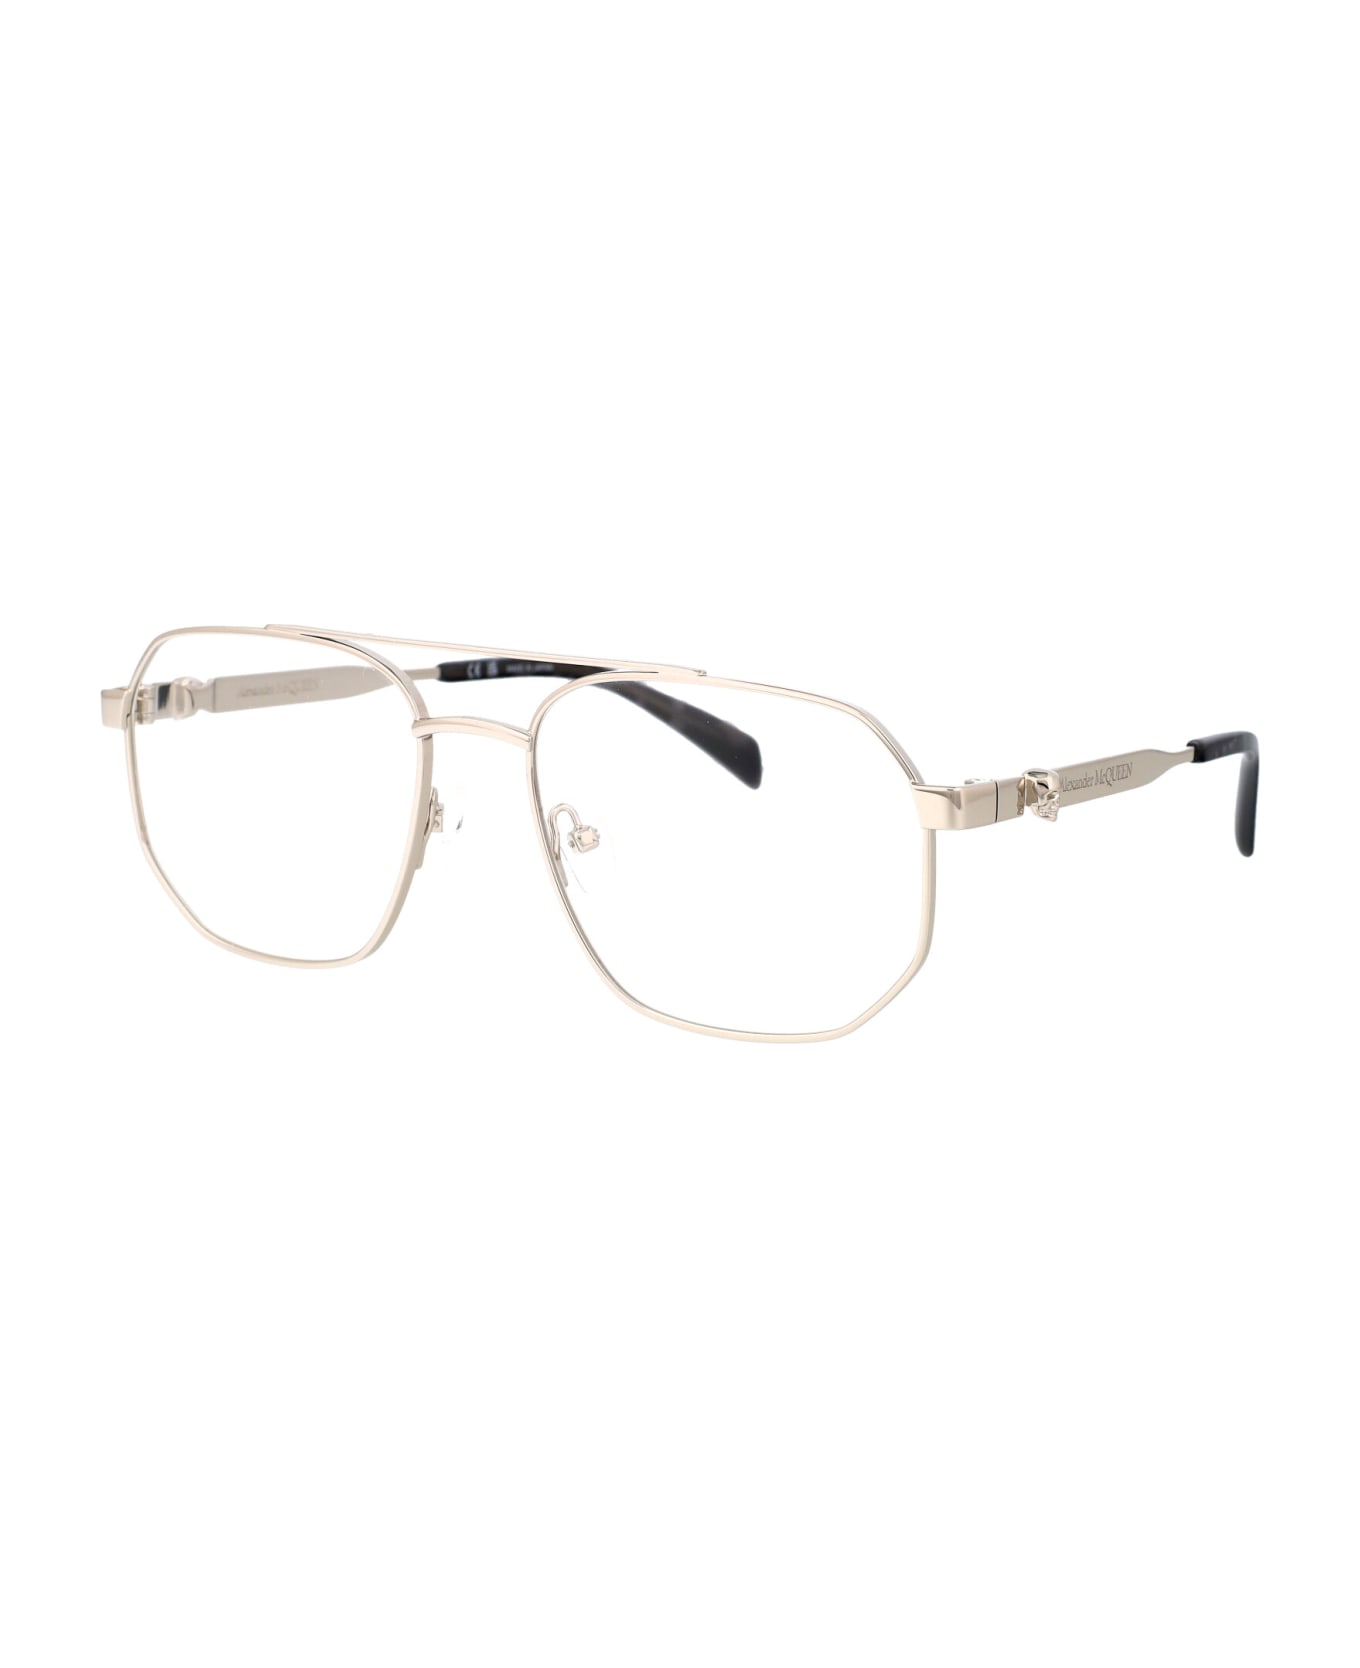 Alexander McQueen Eyewear Am0459o Glasses - 003 SILVER SILVER TRANSPARENT